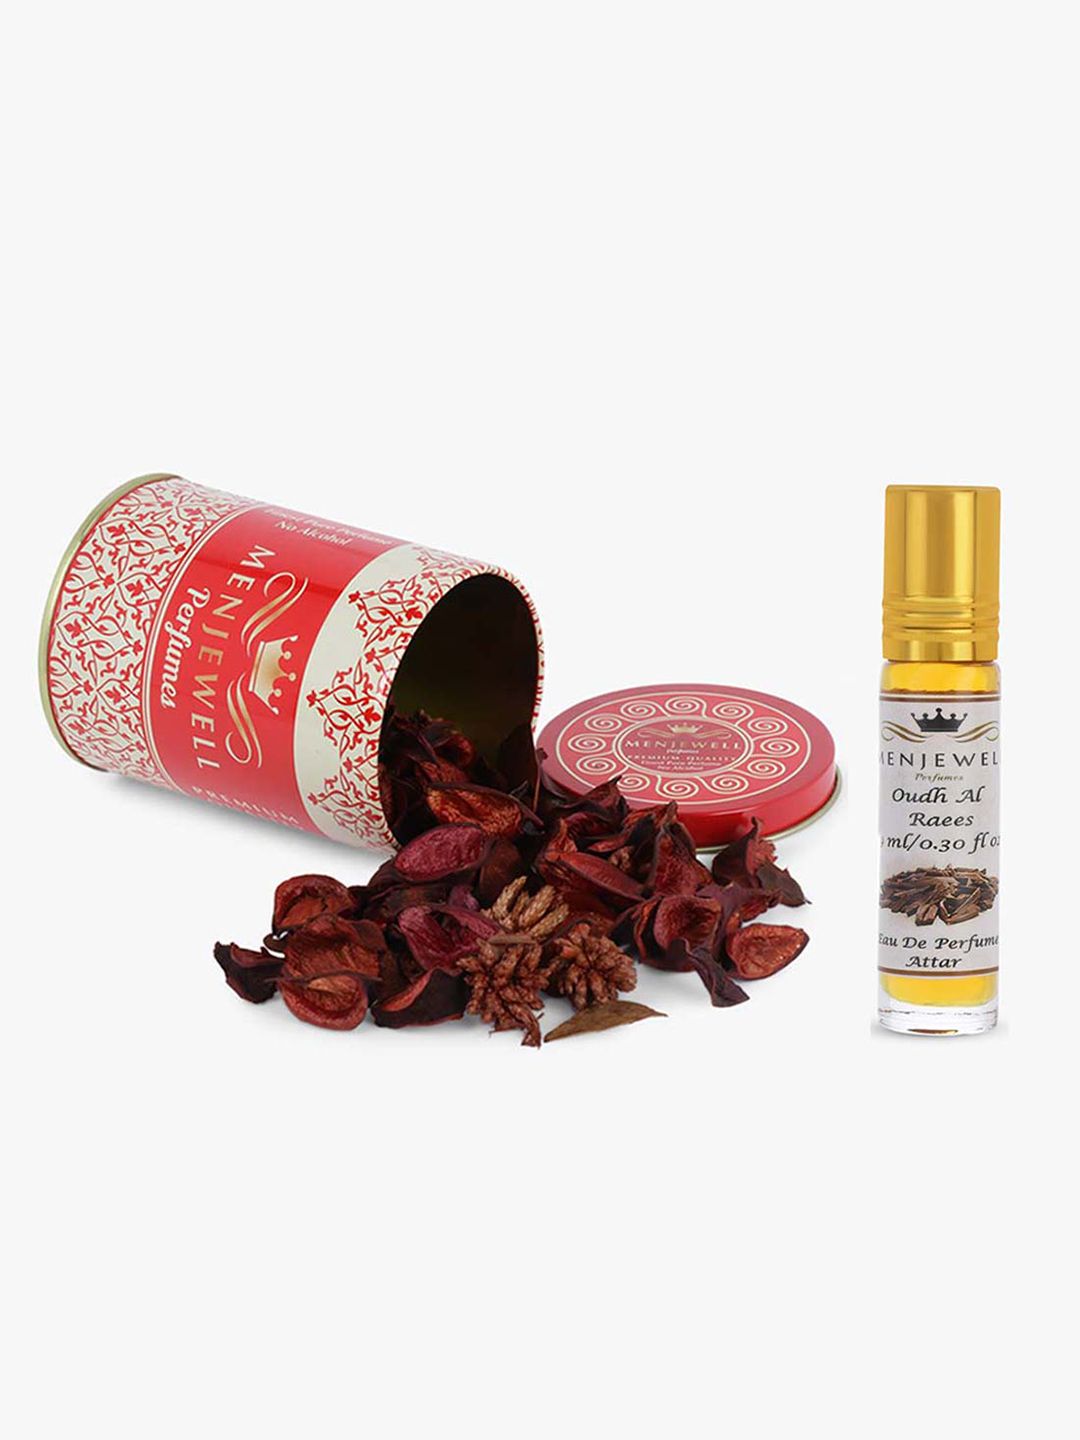 Menjewell Unisex Fragrance Oudh-AI-Raees Long Lasting Perfume - 9 ml Price in India